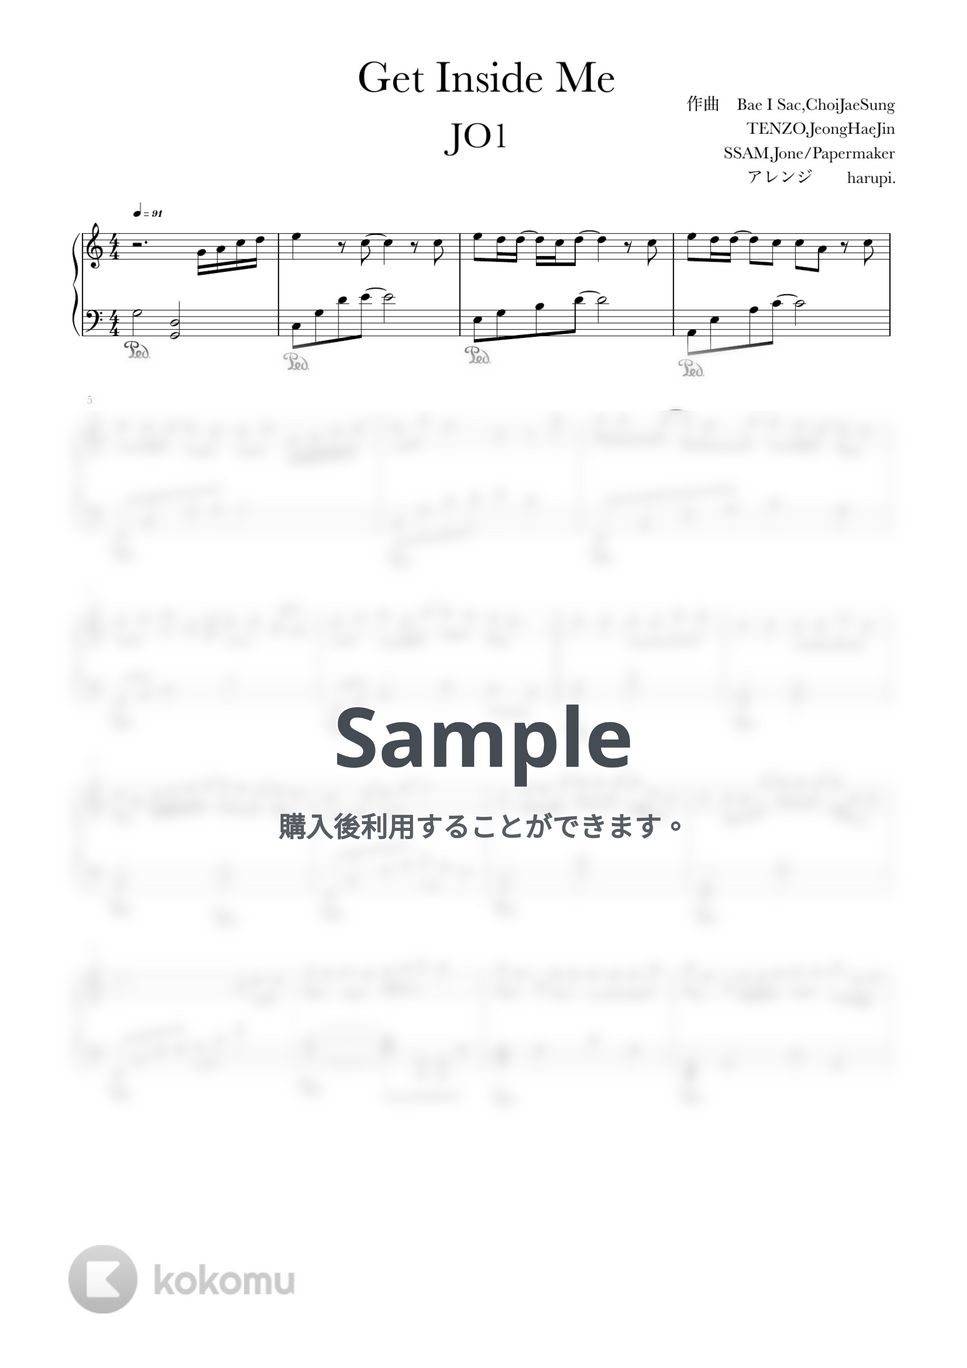 JO1 - Get Inside Me (ピアノソロ,ハ長調,JO1) by harupi